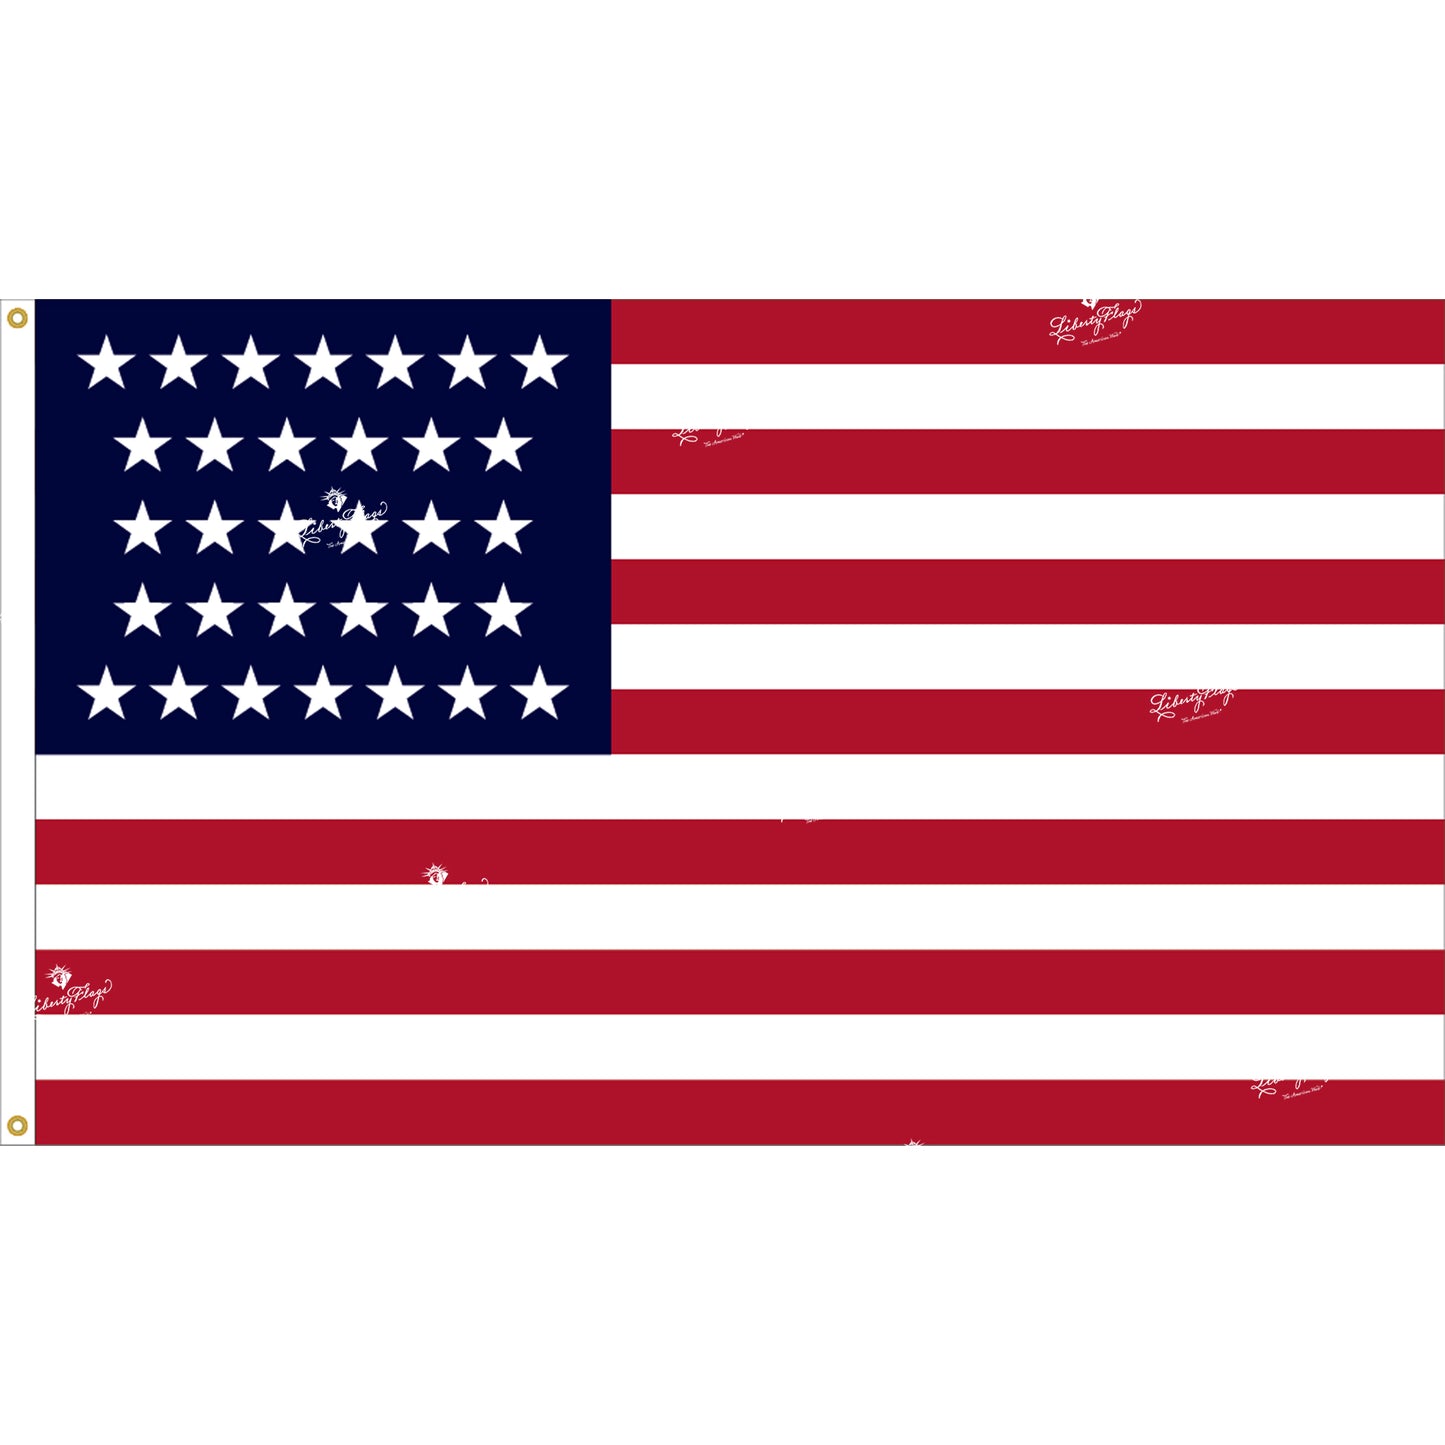 32 Star Outdoor Historic U.S. Flags